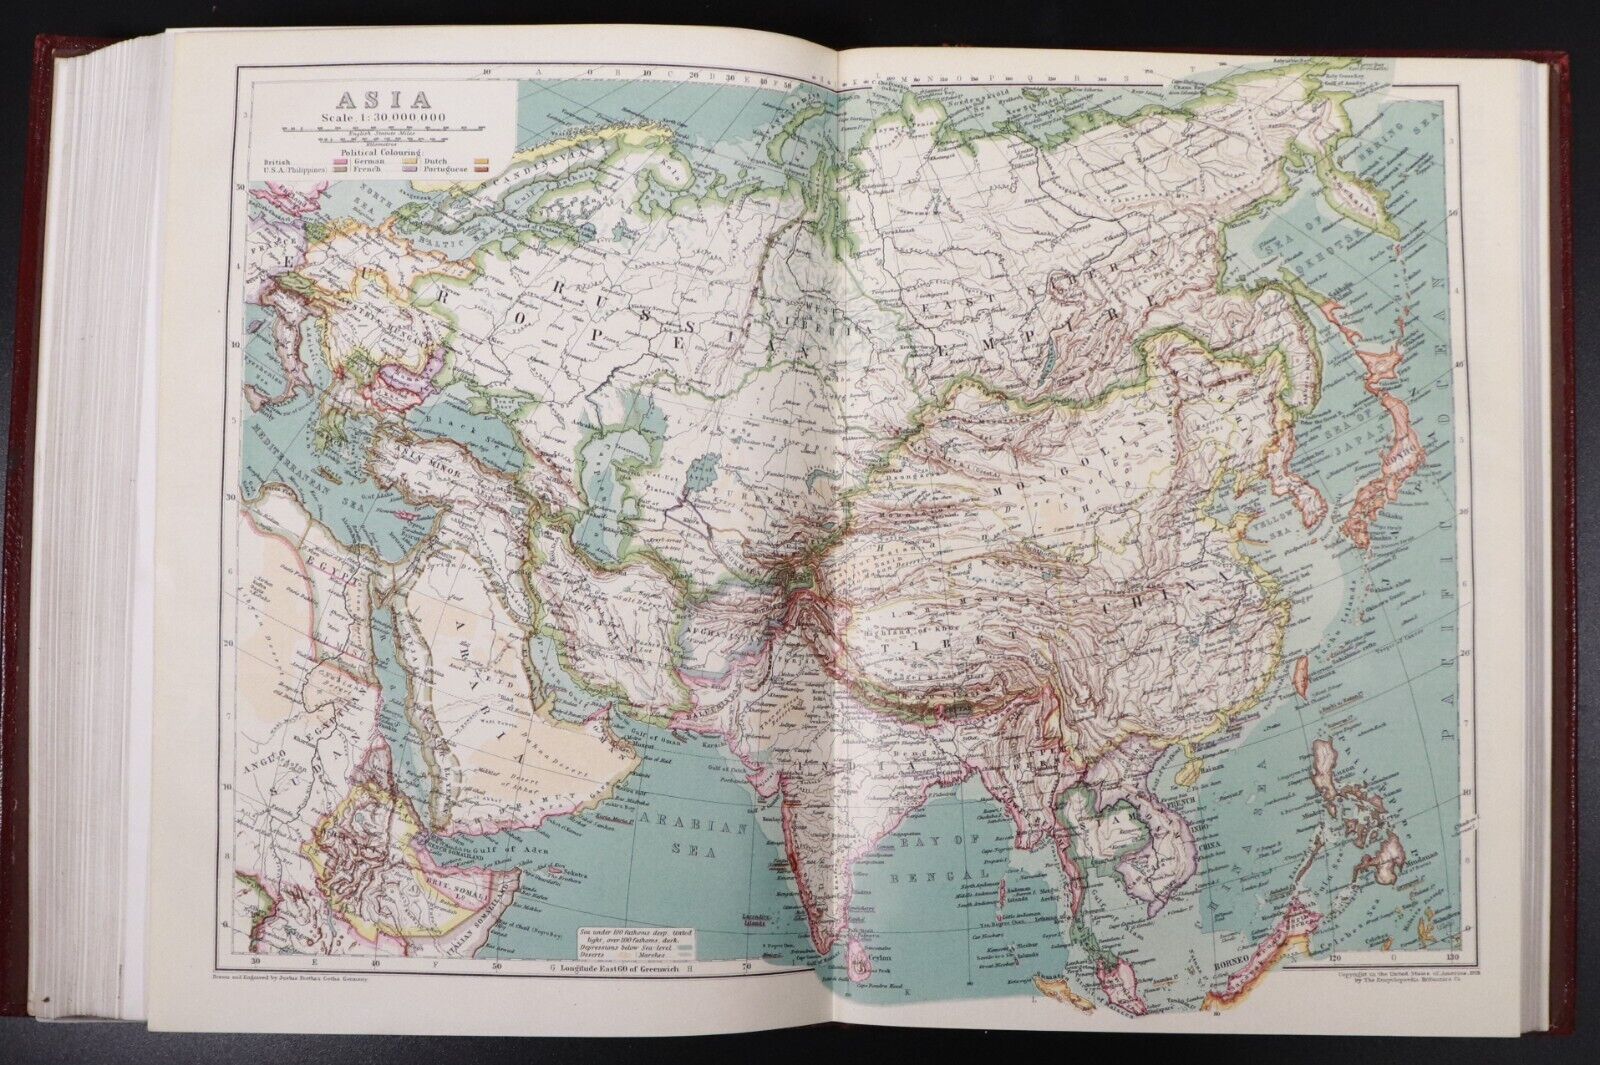 1910 4vol Encyclopaedia Britannica 11th Edition Antique Reference Books Maps